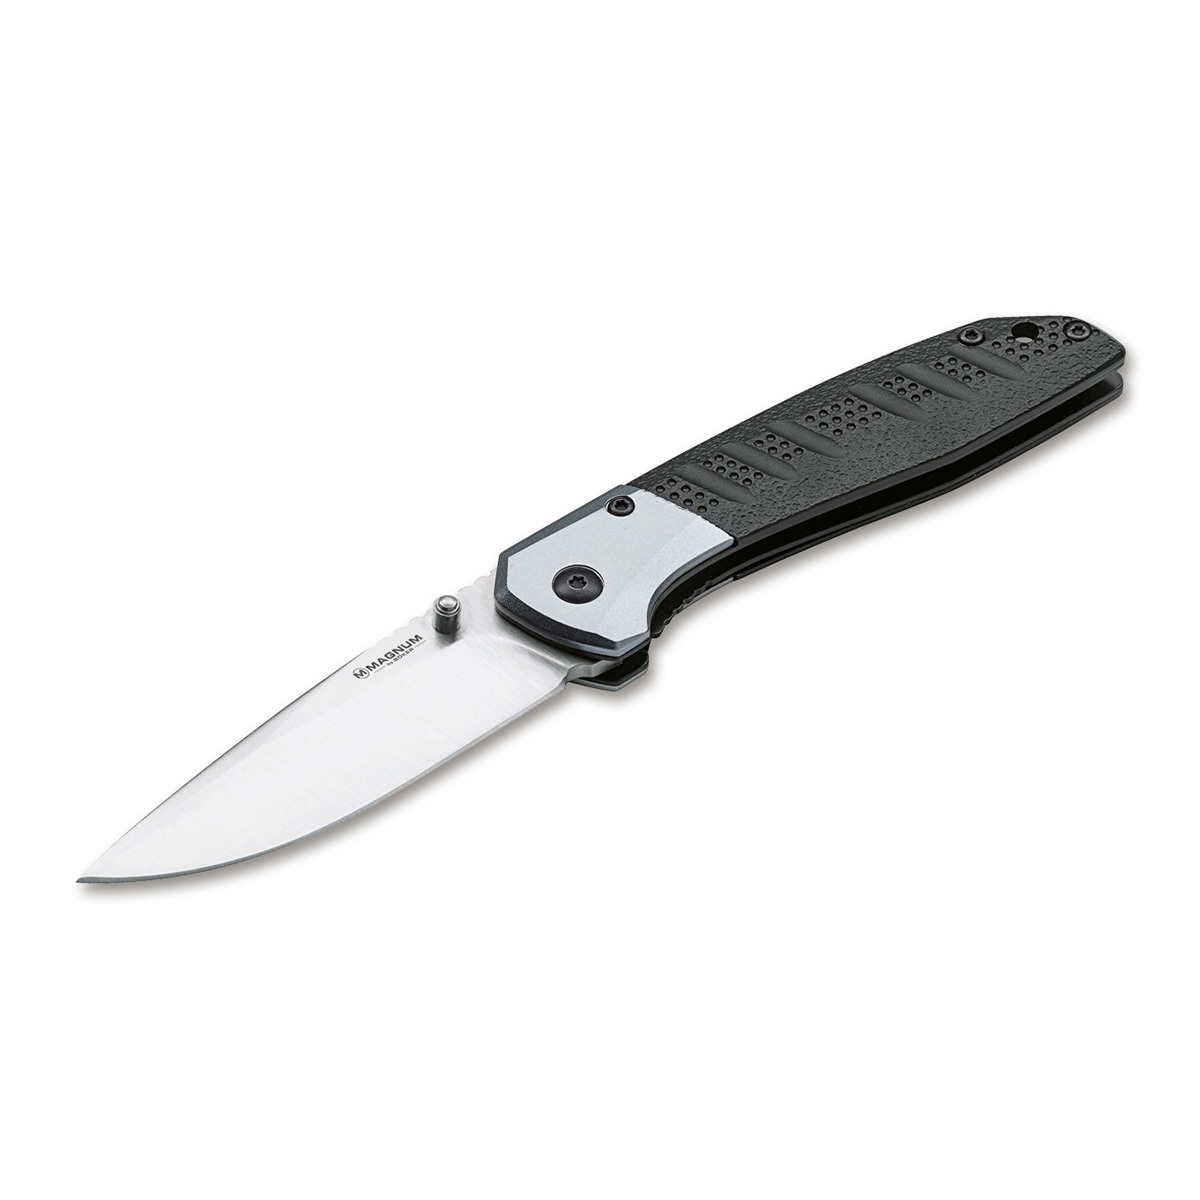 Нож складной Boker Advance pro edc, сталь 440C, рукоять алюминий складной полуавтоматический нож kershaw cryo k1555ti сталь 8cr13mov рукоять сталь